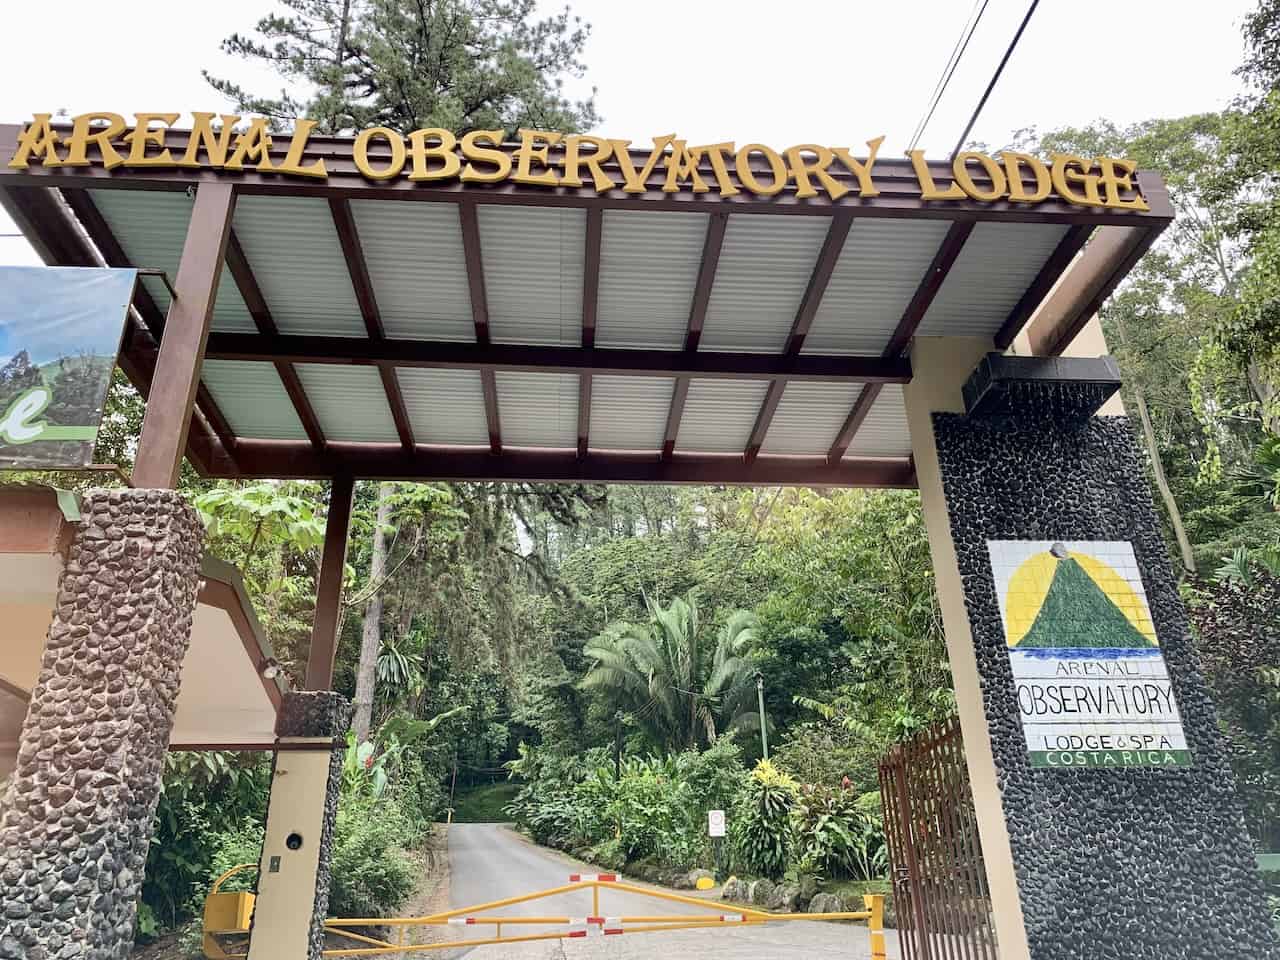 Arenal Observatory Lodge Entrance